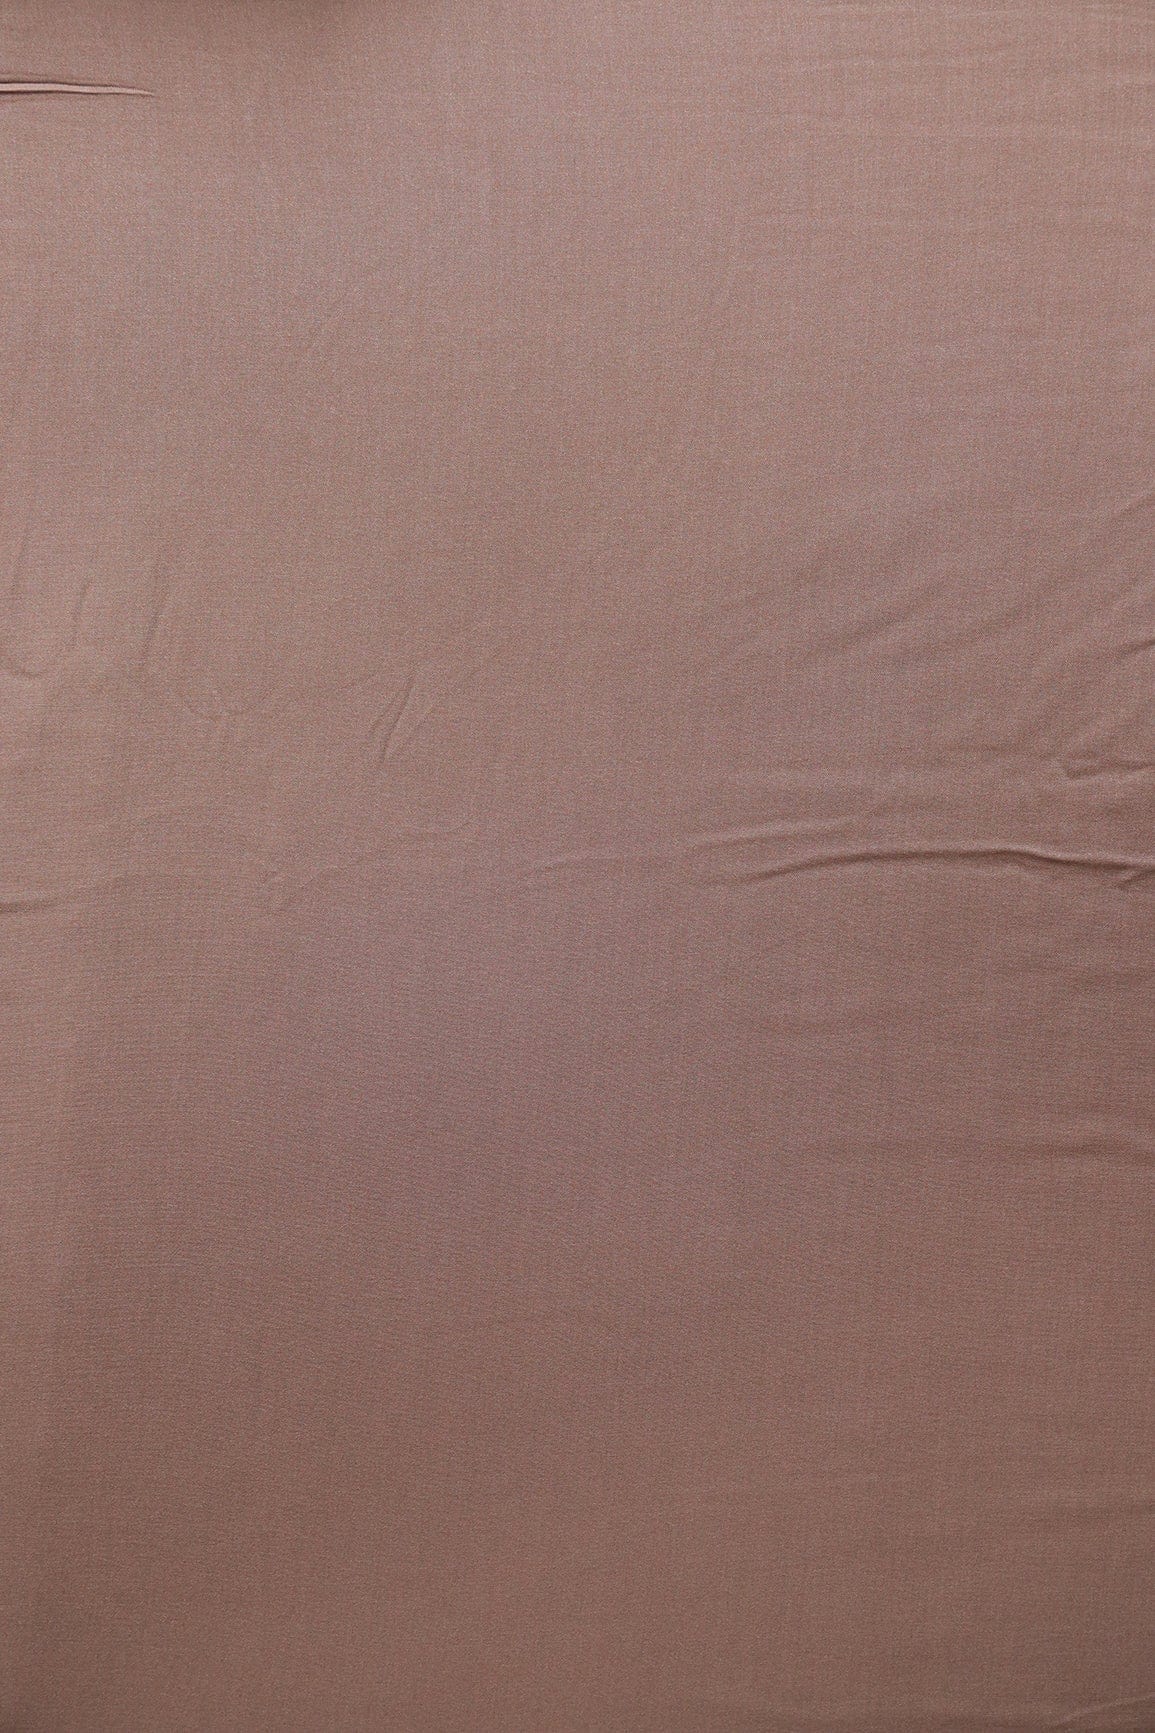 doeraa Plain Fabrics Coco Brown Dyed Muslin Fabric